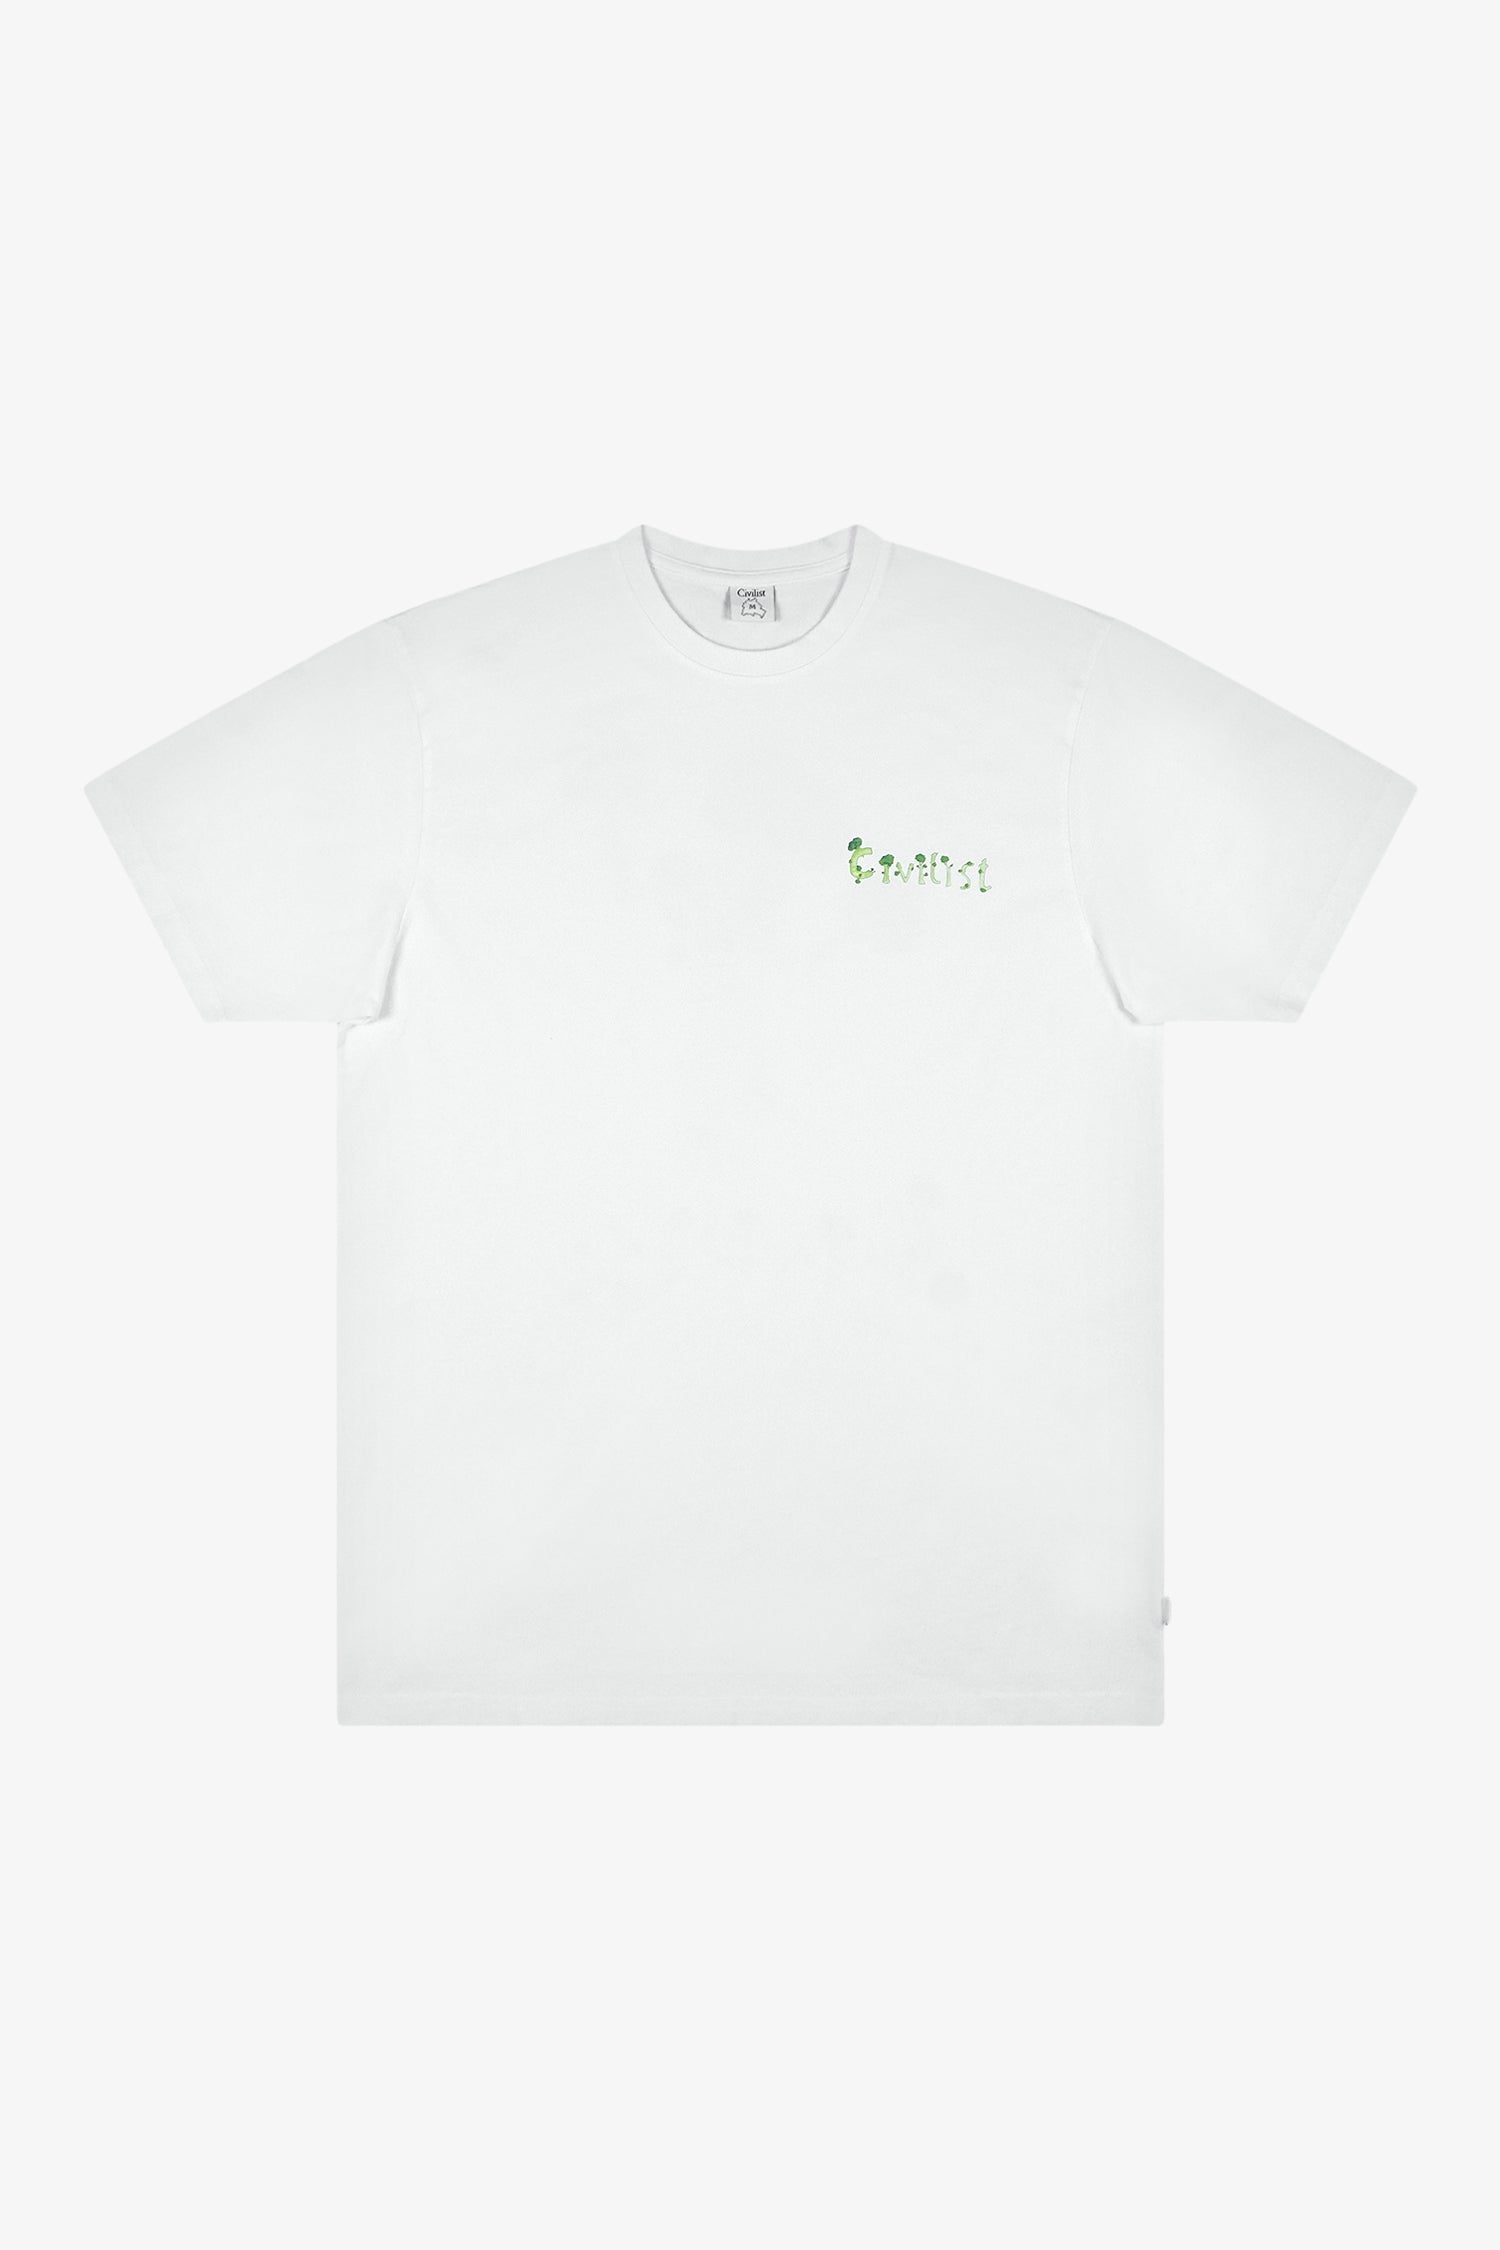 Selectshop FRAME - CIVILIST Broccoli Kids Tee T-Shirts Dubai